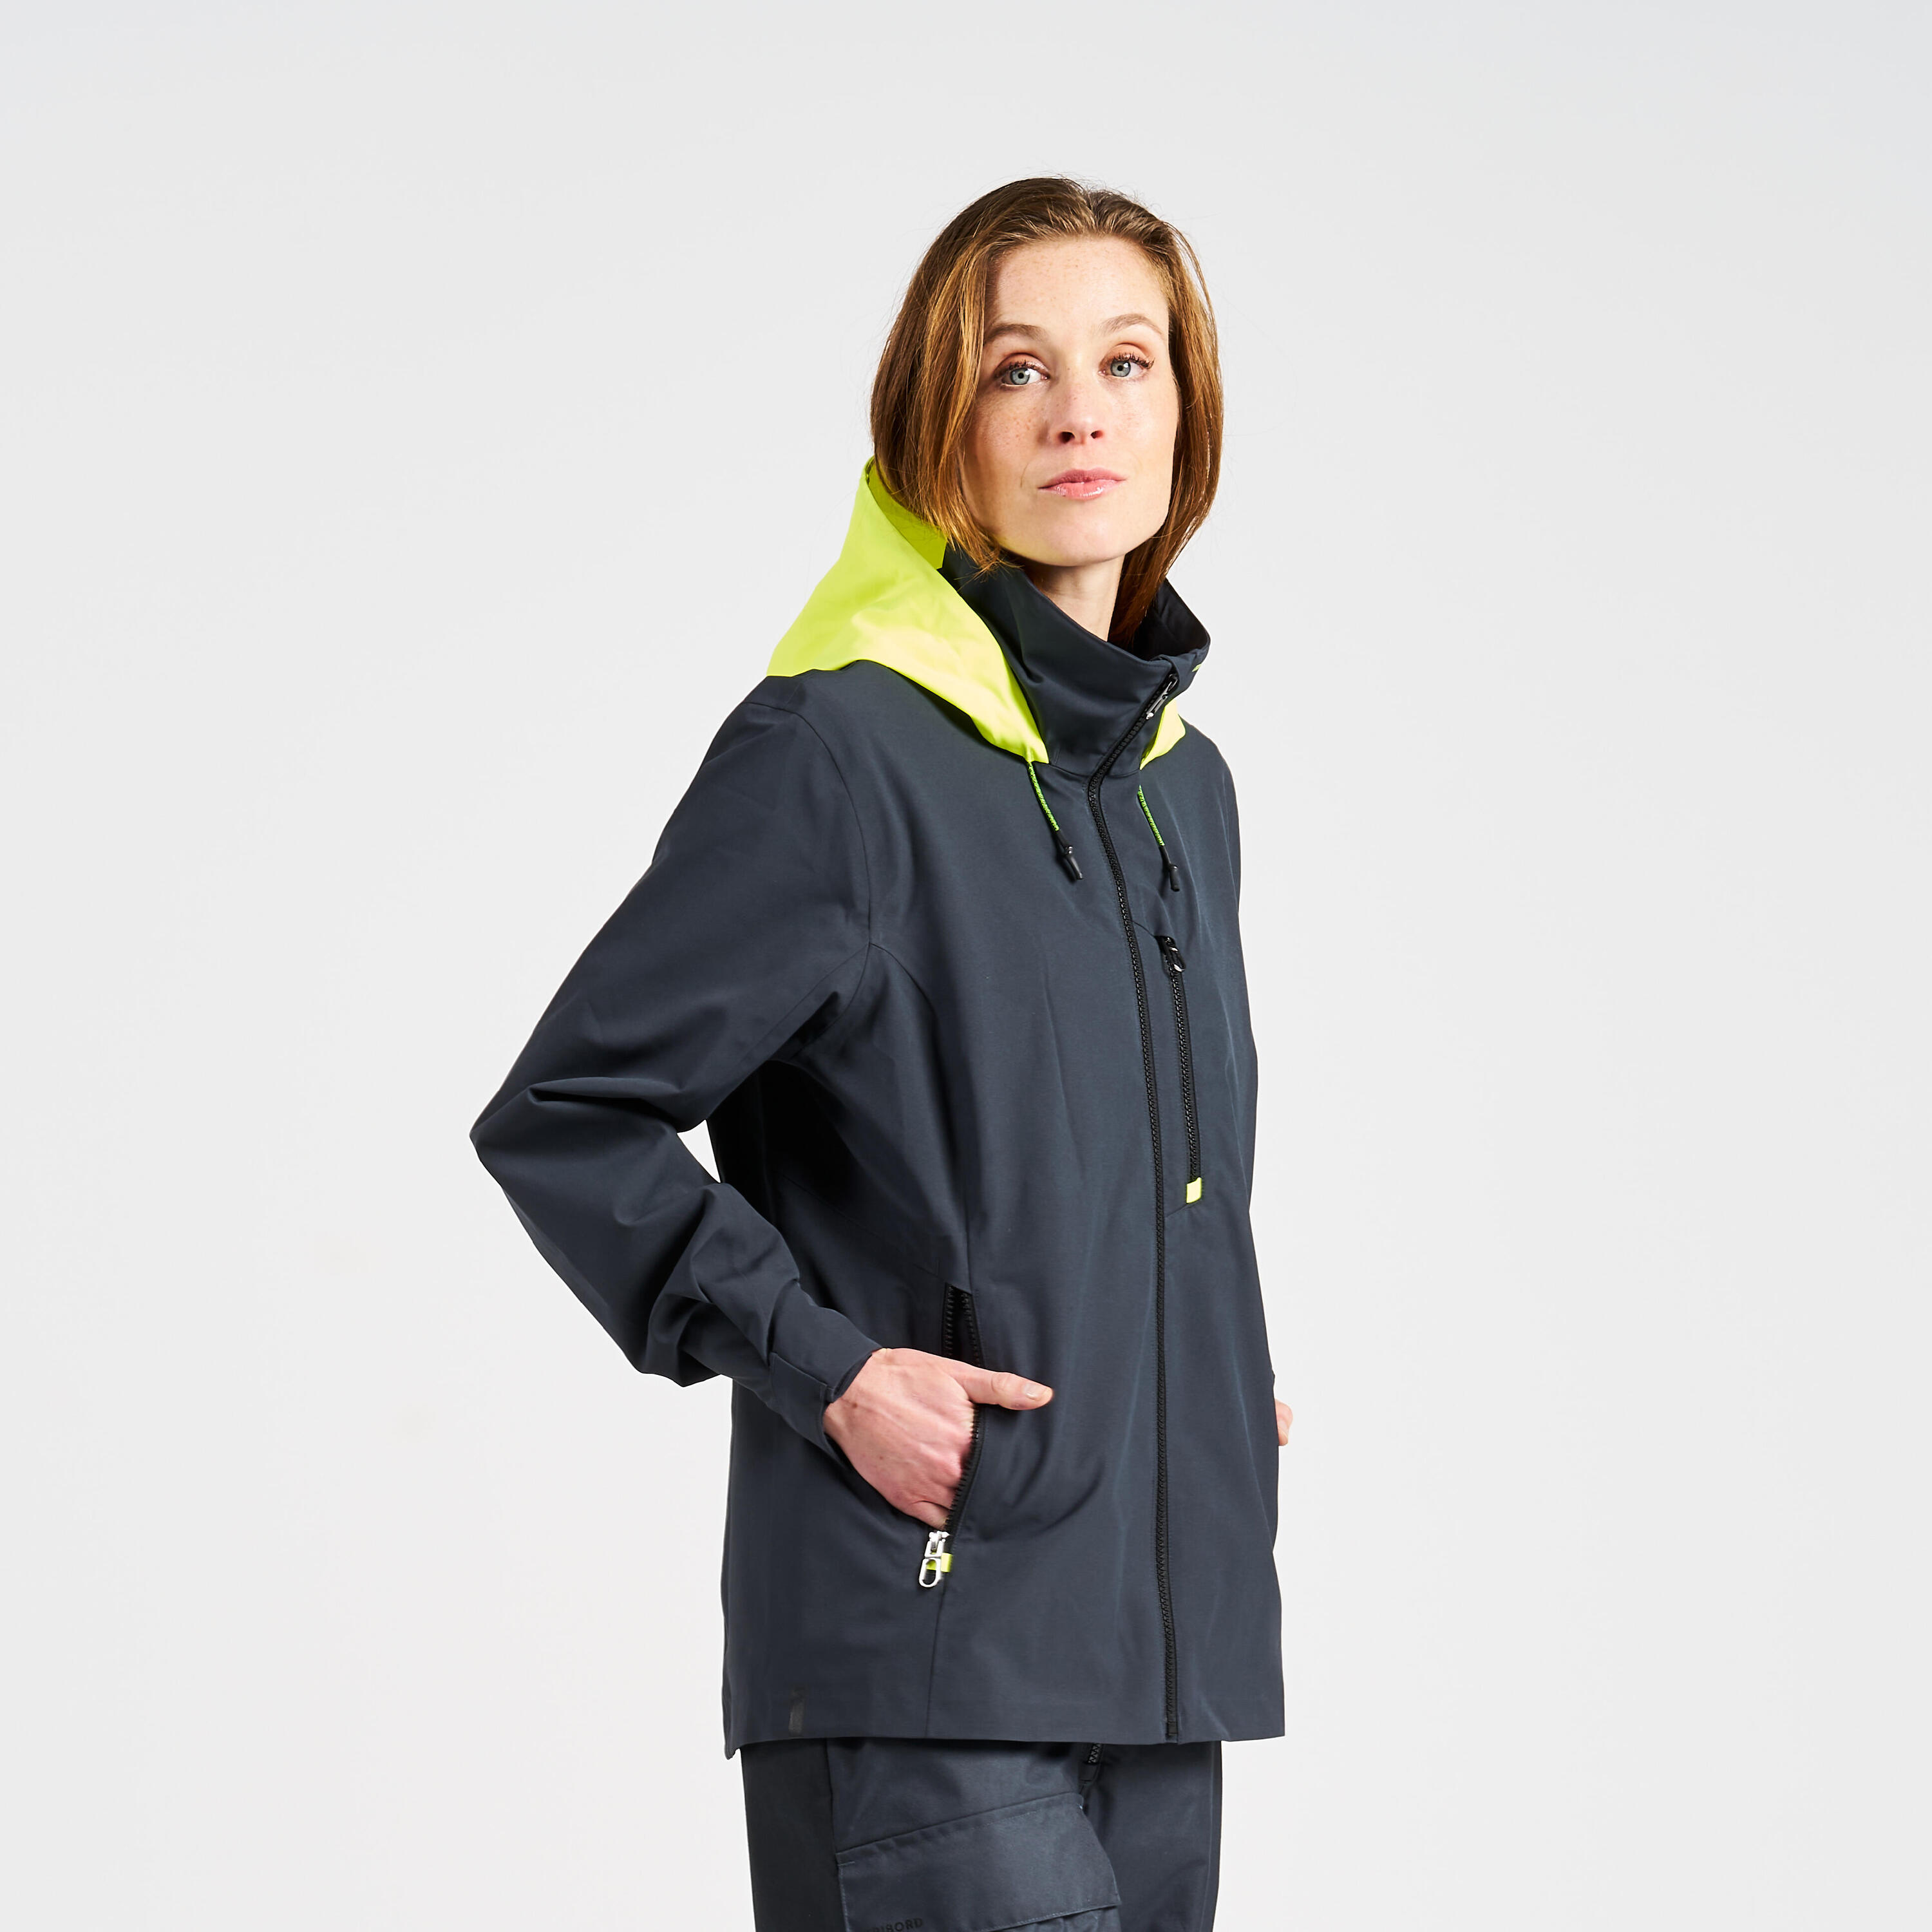 Women's sailing waterproof windproof jacket SAILING 300 - Dark grey Yellow hood 2/13